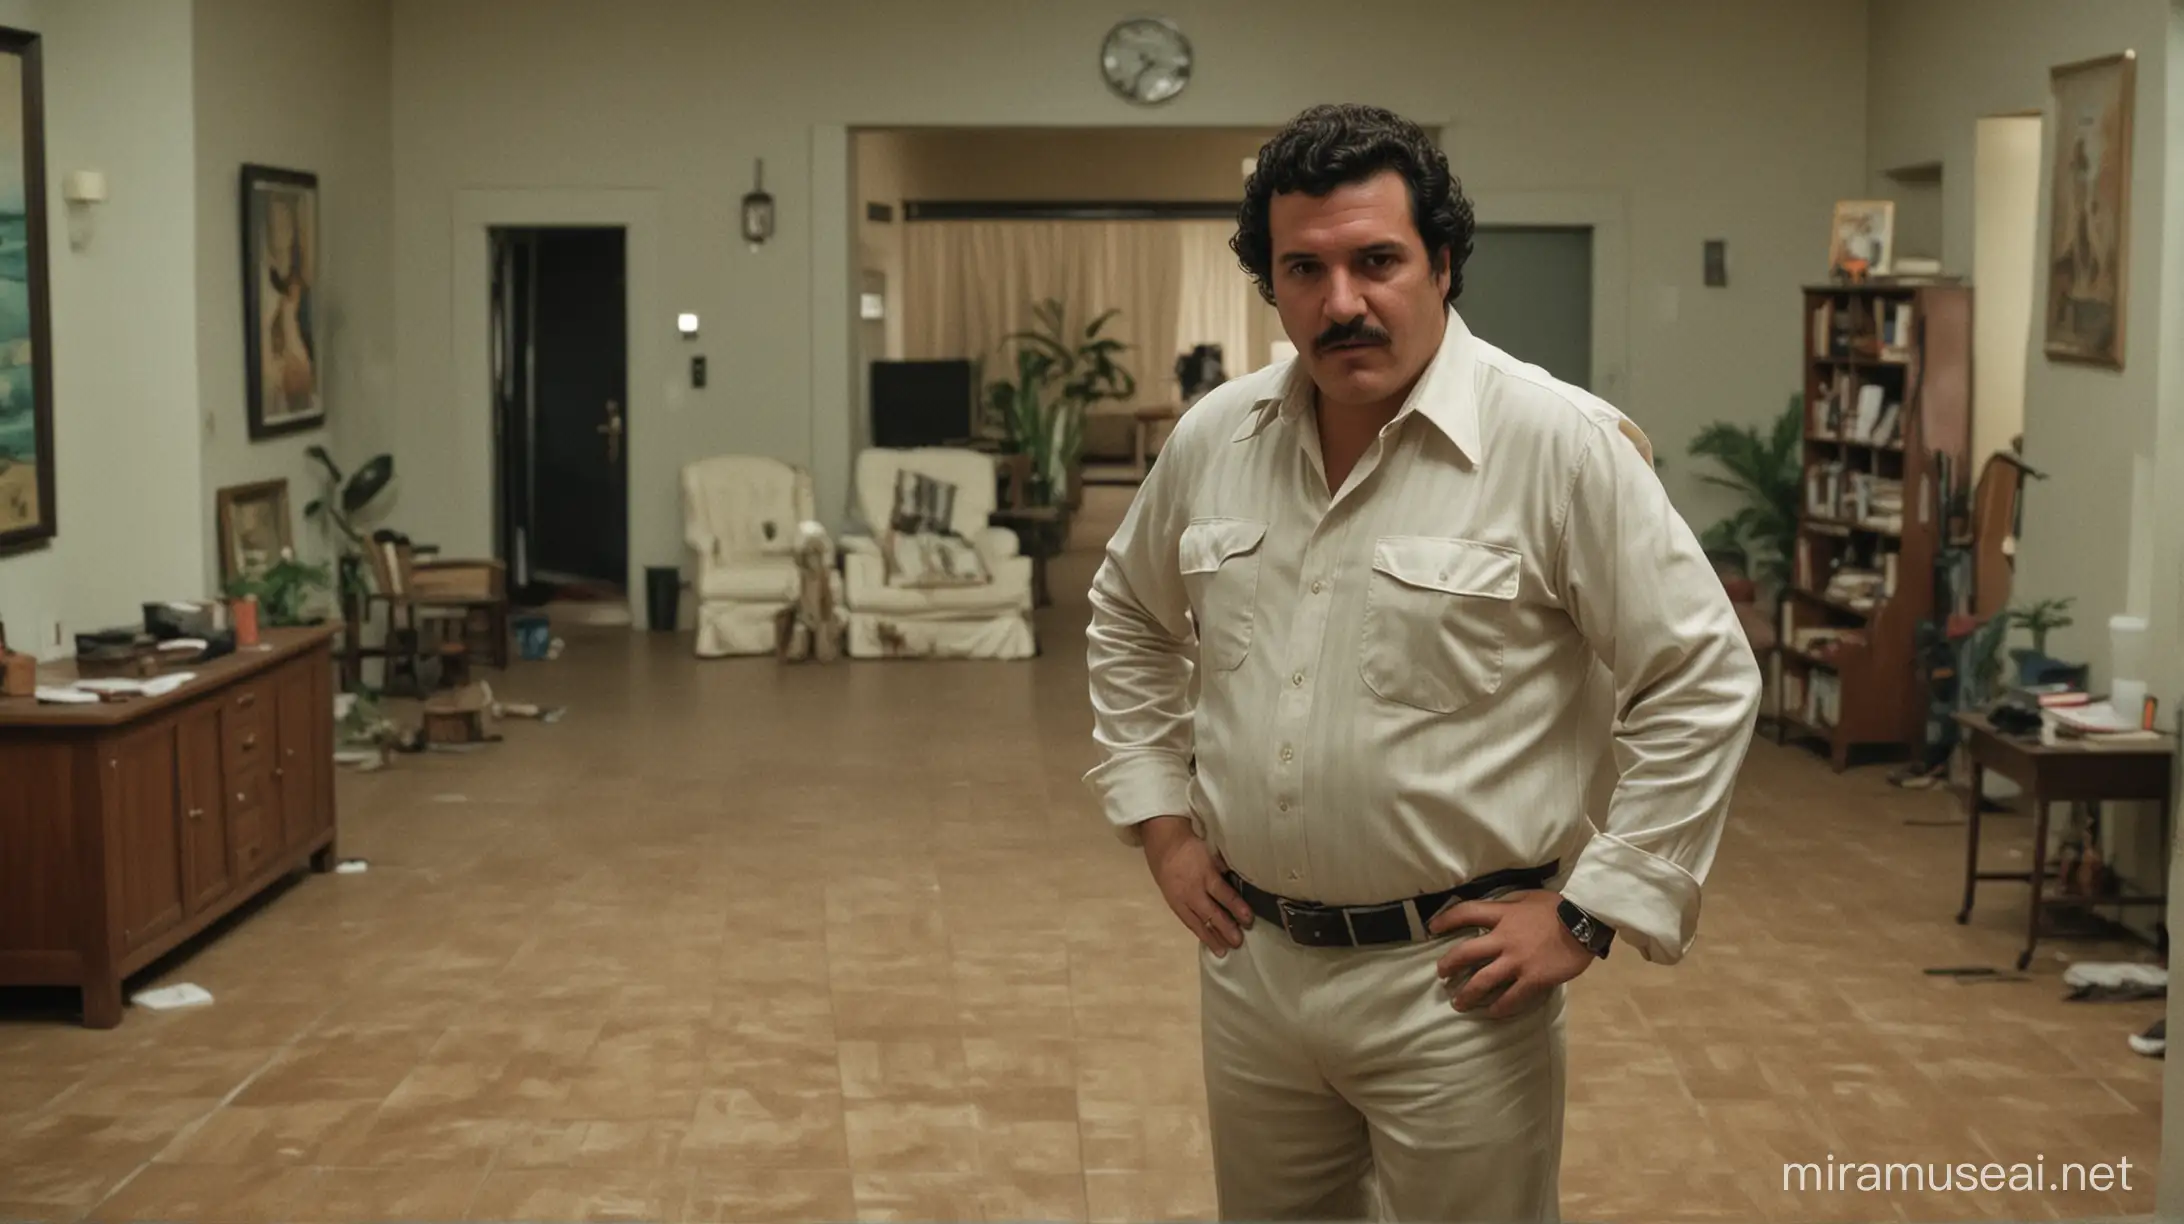 Pablo Escobar Portrait Standing in Room